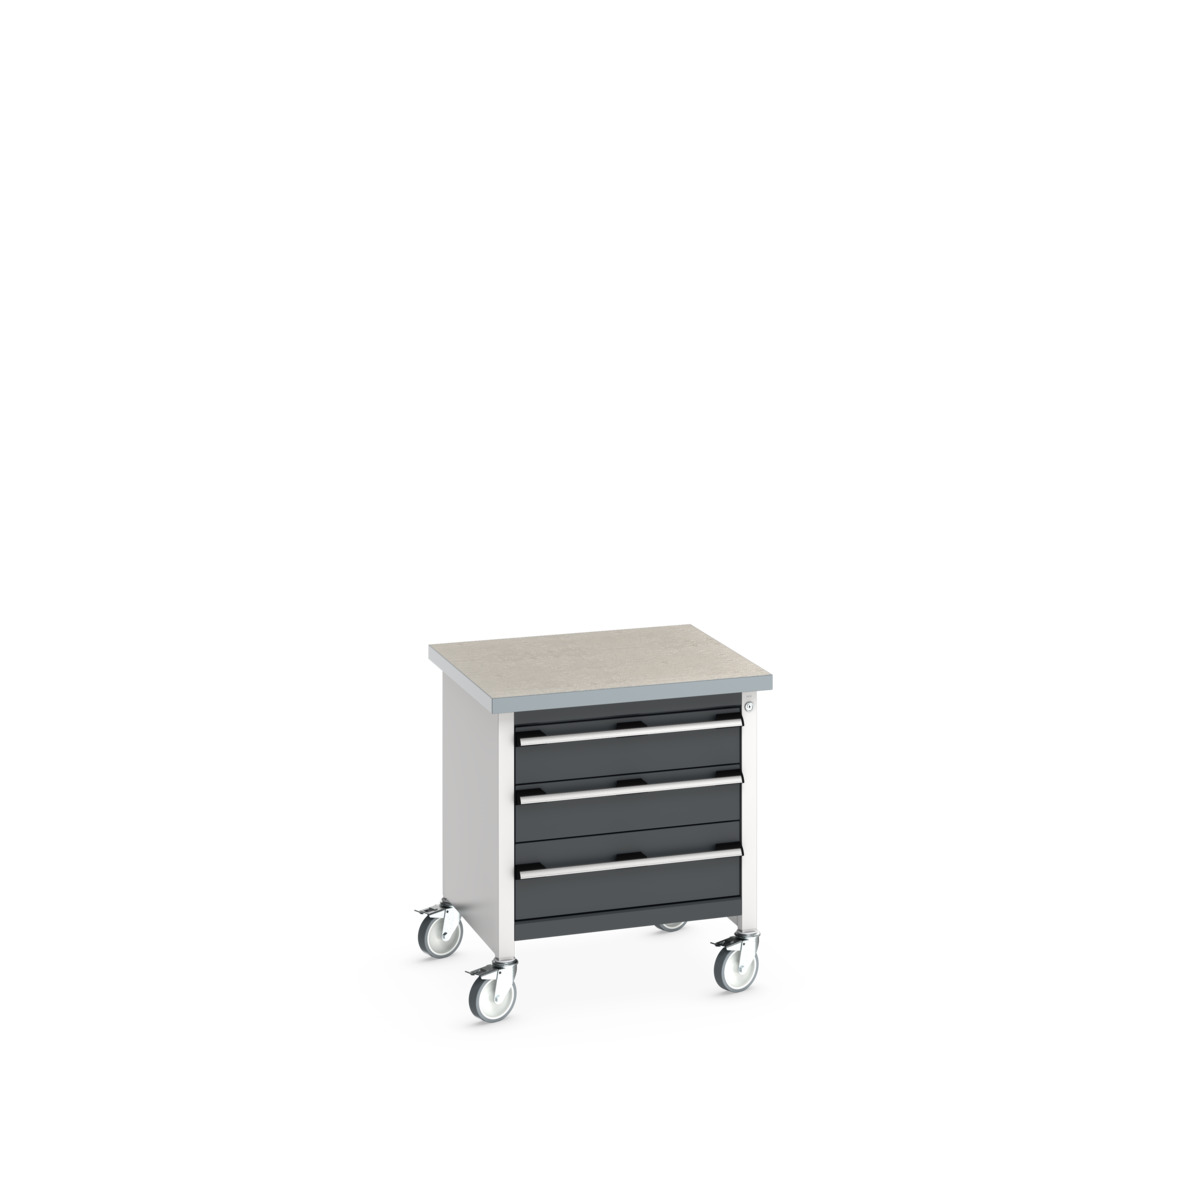 41002093. - cubio mobile storage bench (lino)